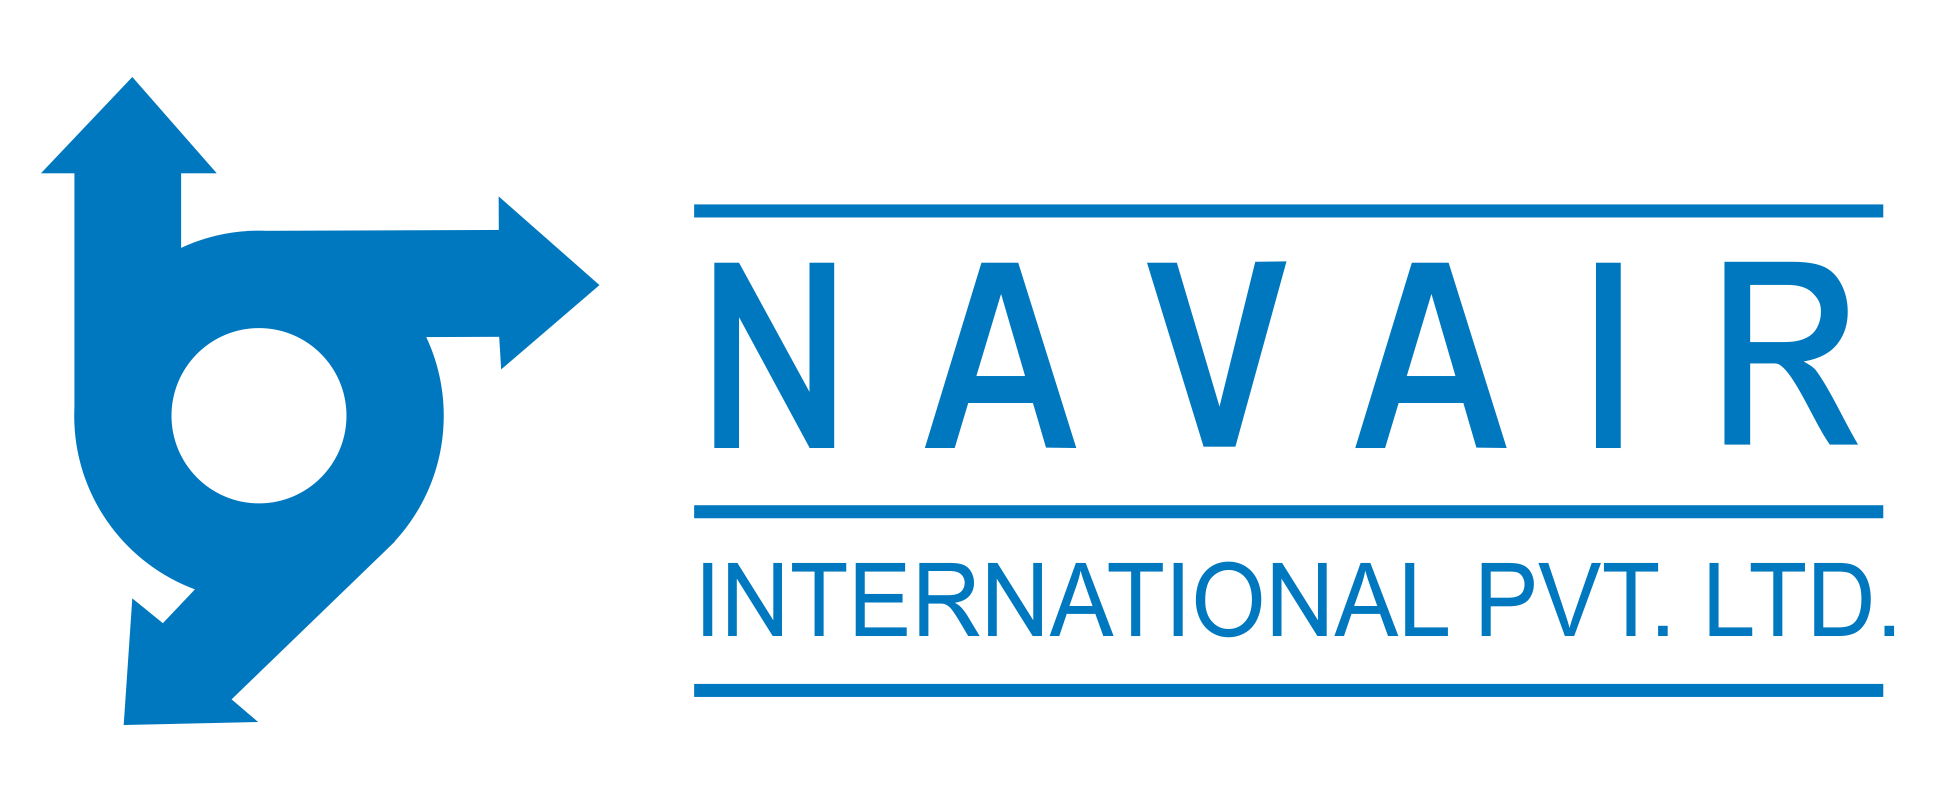 NAVAIR LOGO | Navair International